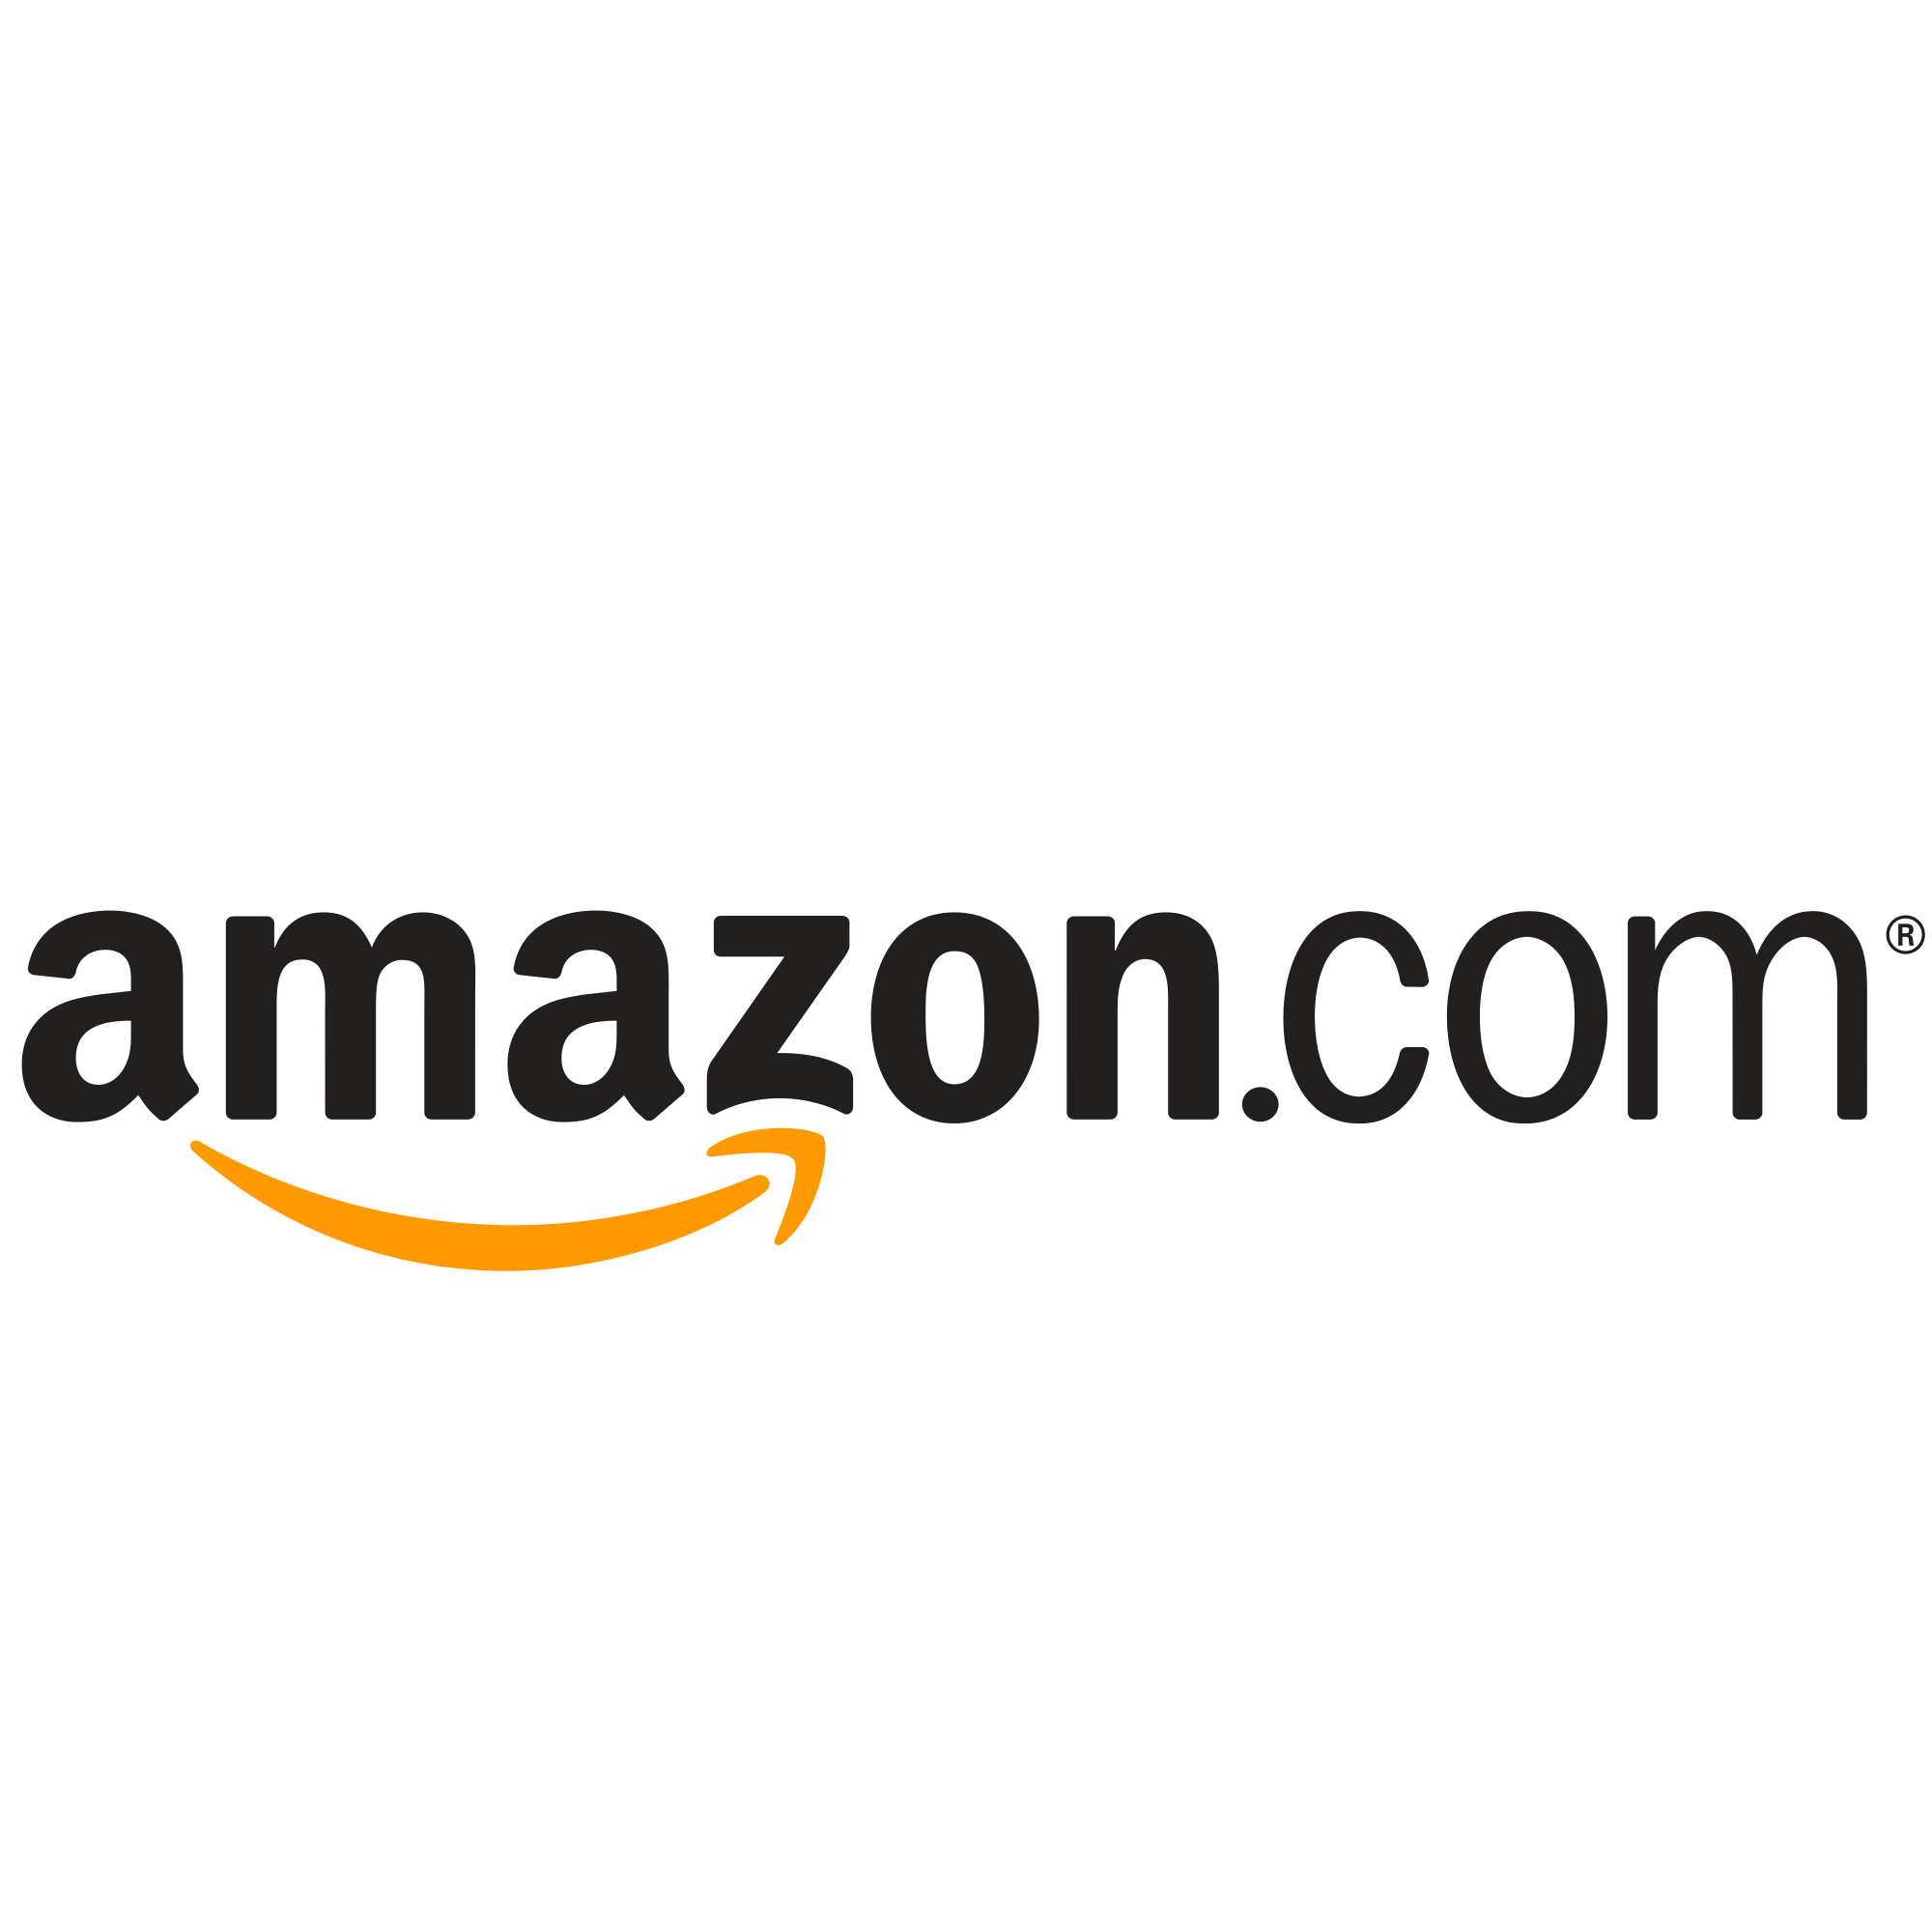 www Amazon Com Logo - Amazon.com LOGO | Building Successful Online Business